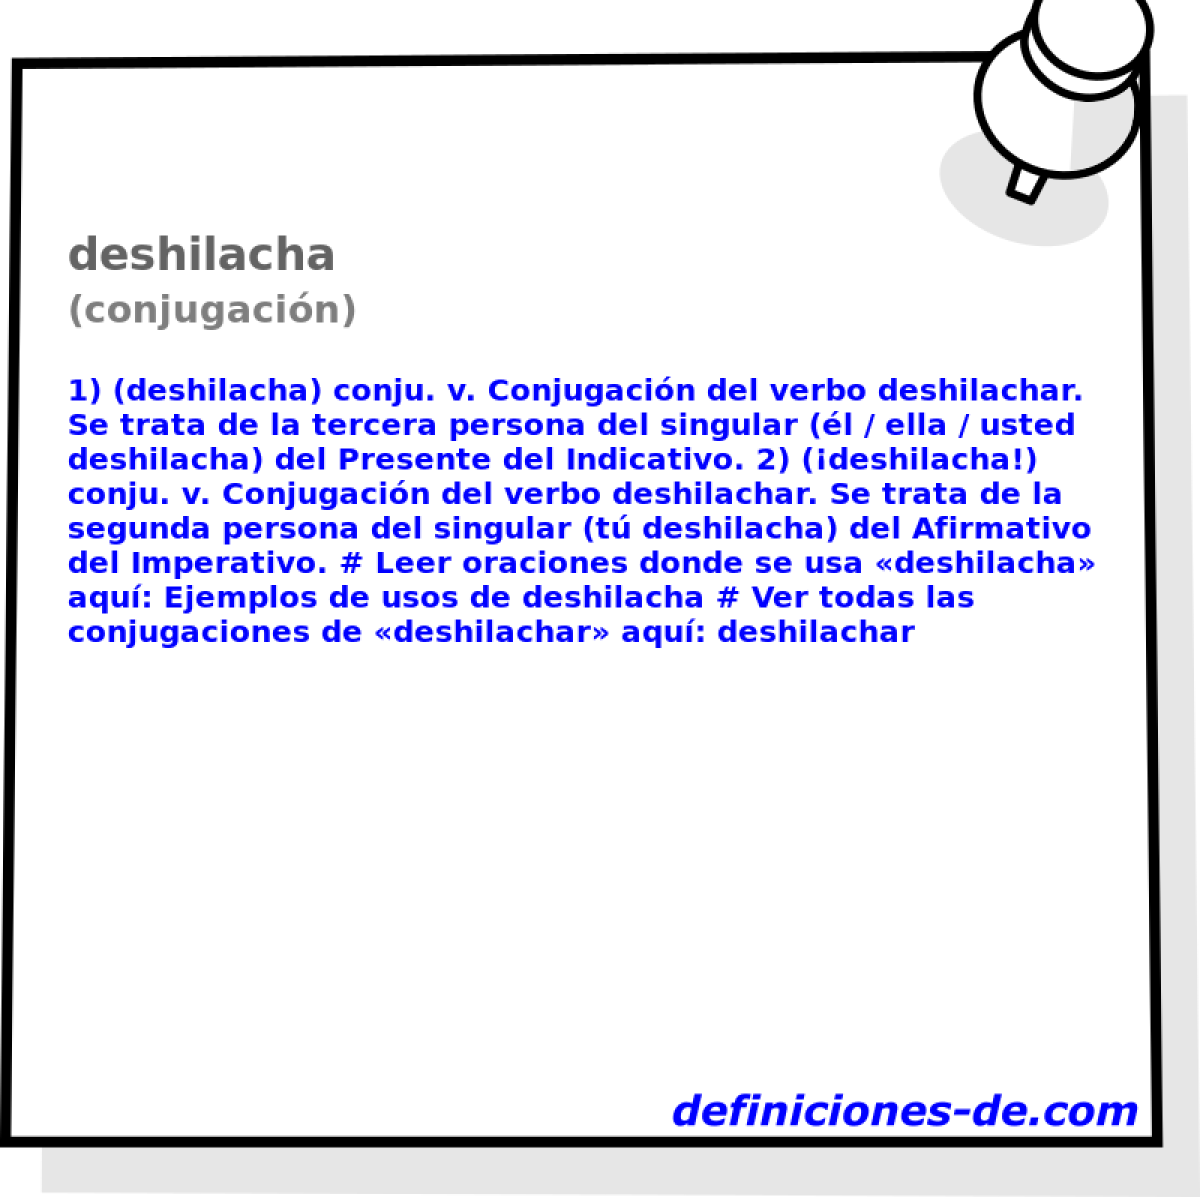 deshilacha (conjugacin)